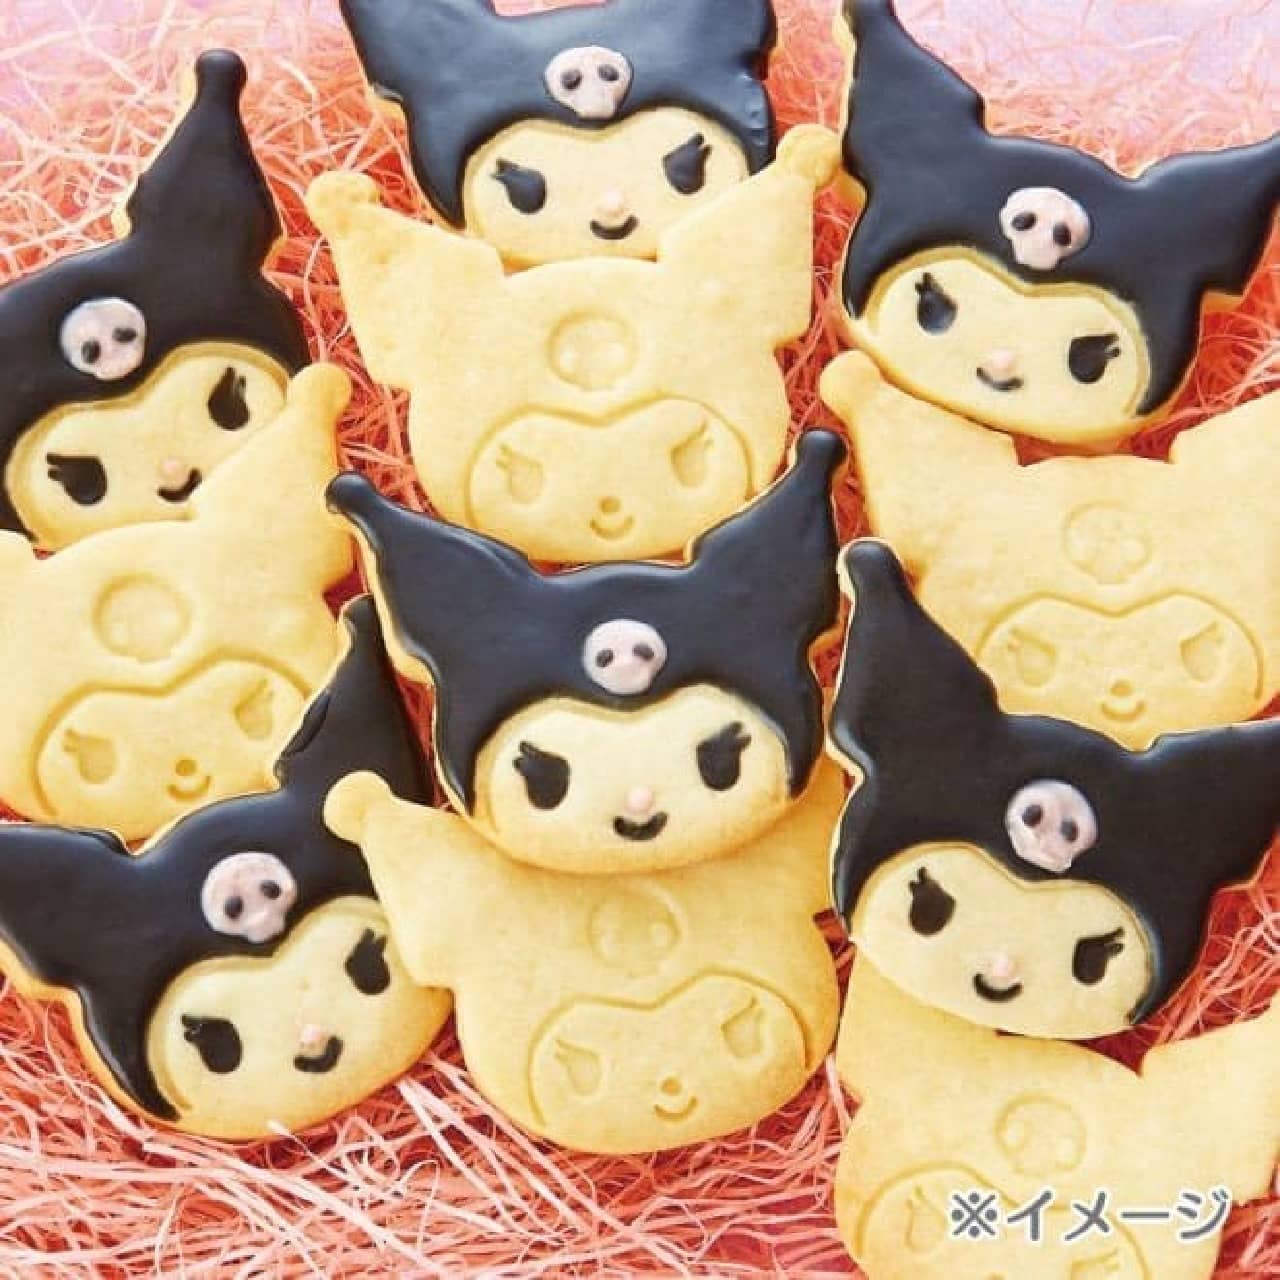 Sanrio character type cookie kit